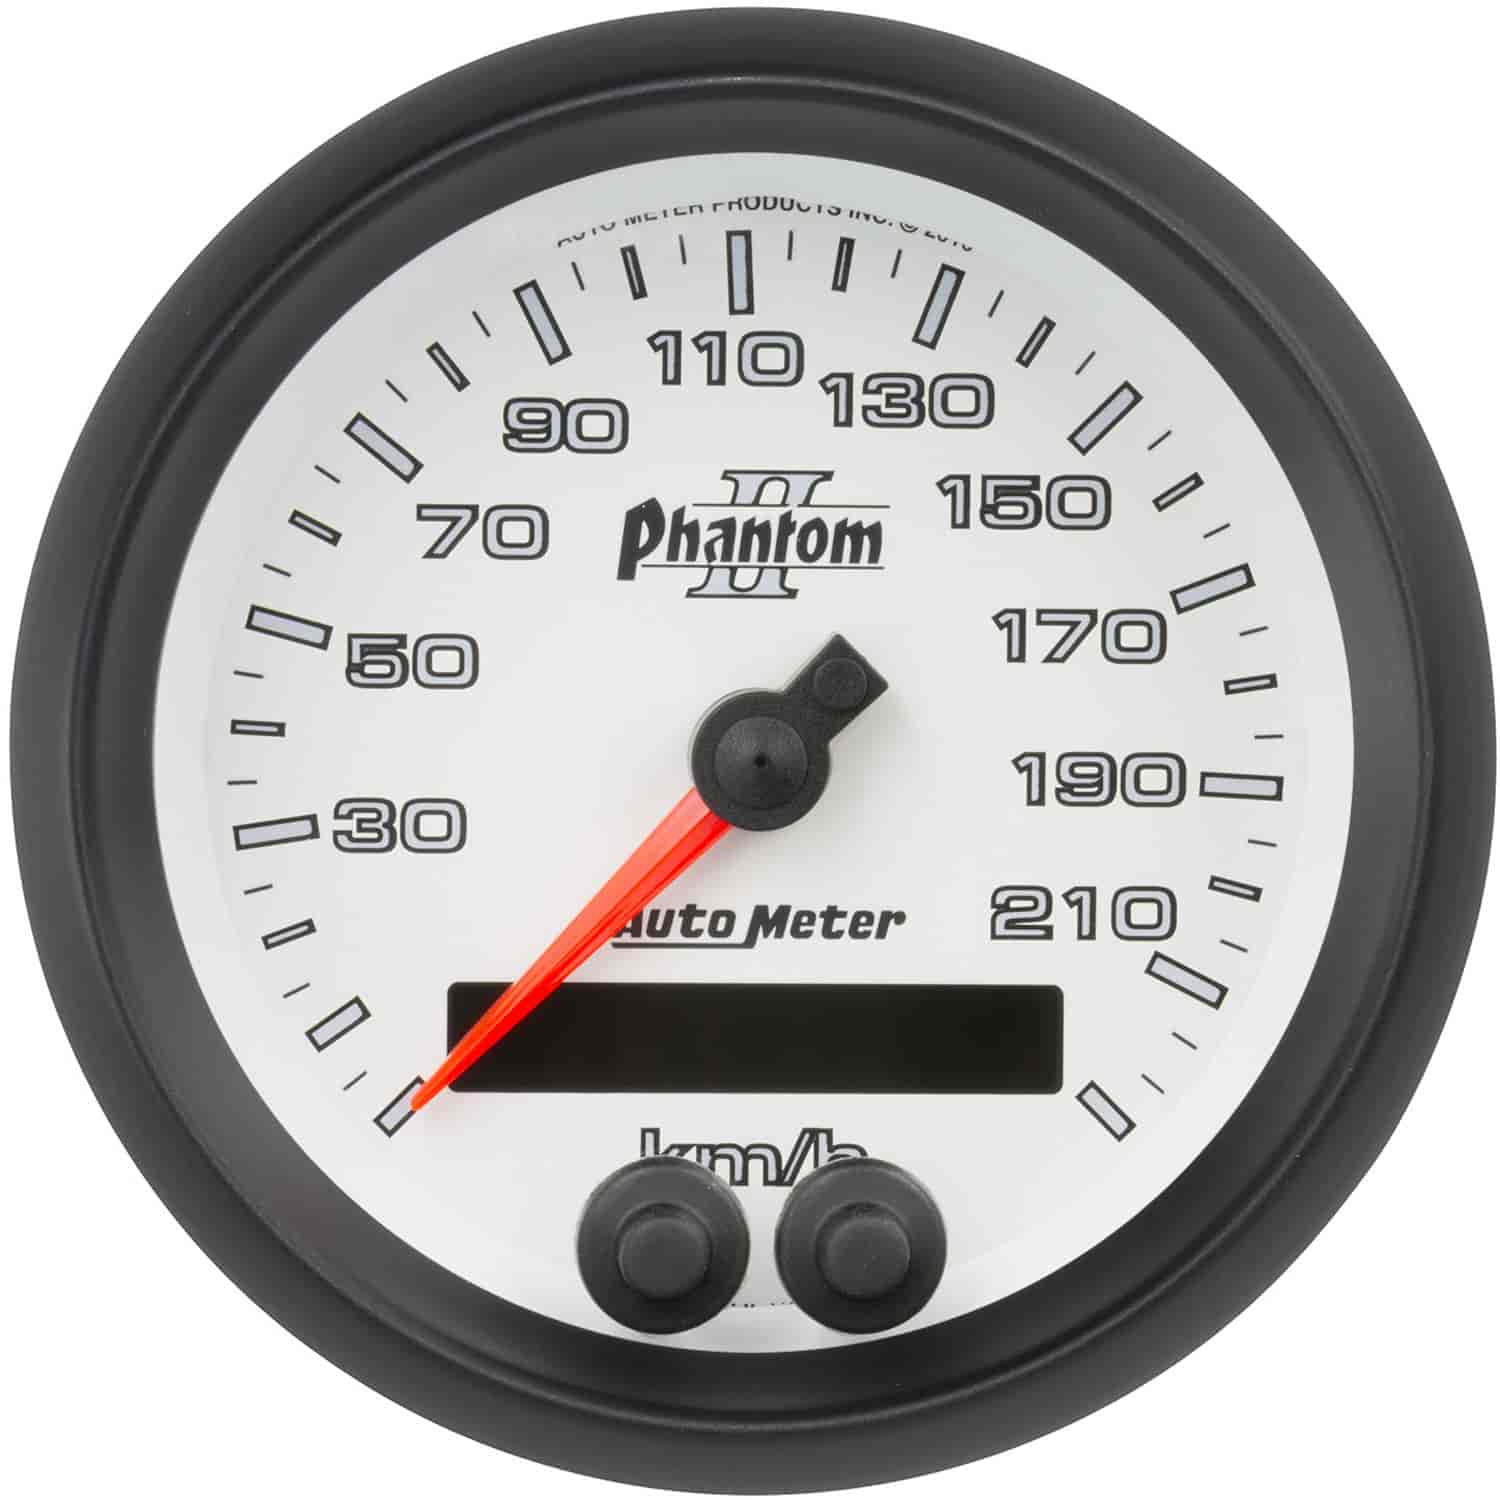 Phantom II LED GPS Speedometer